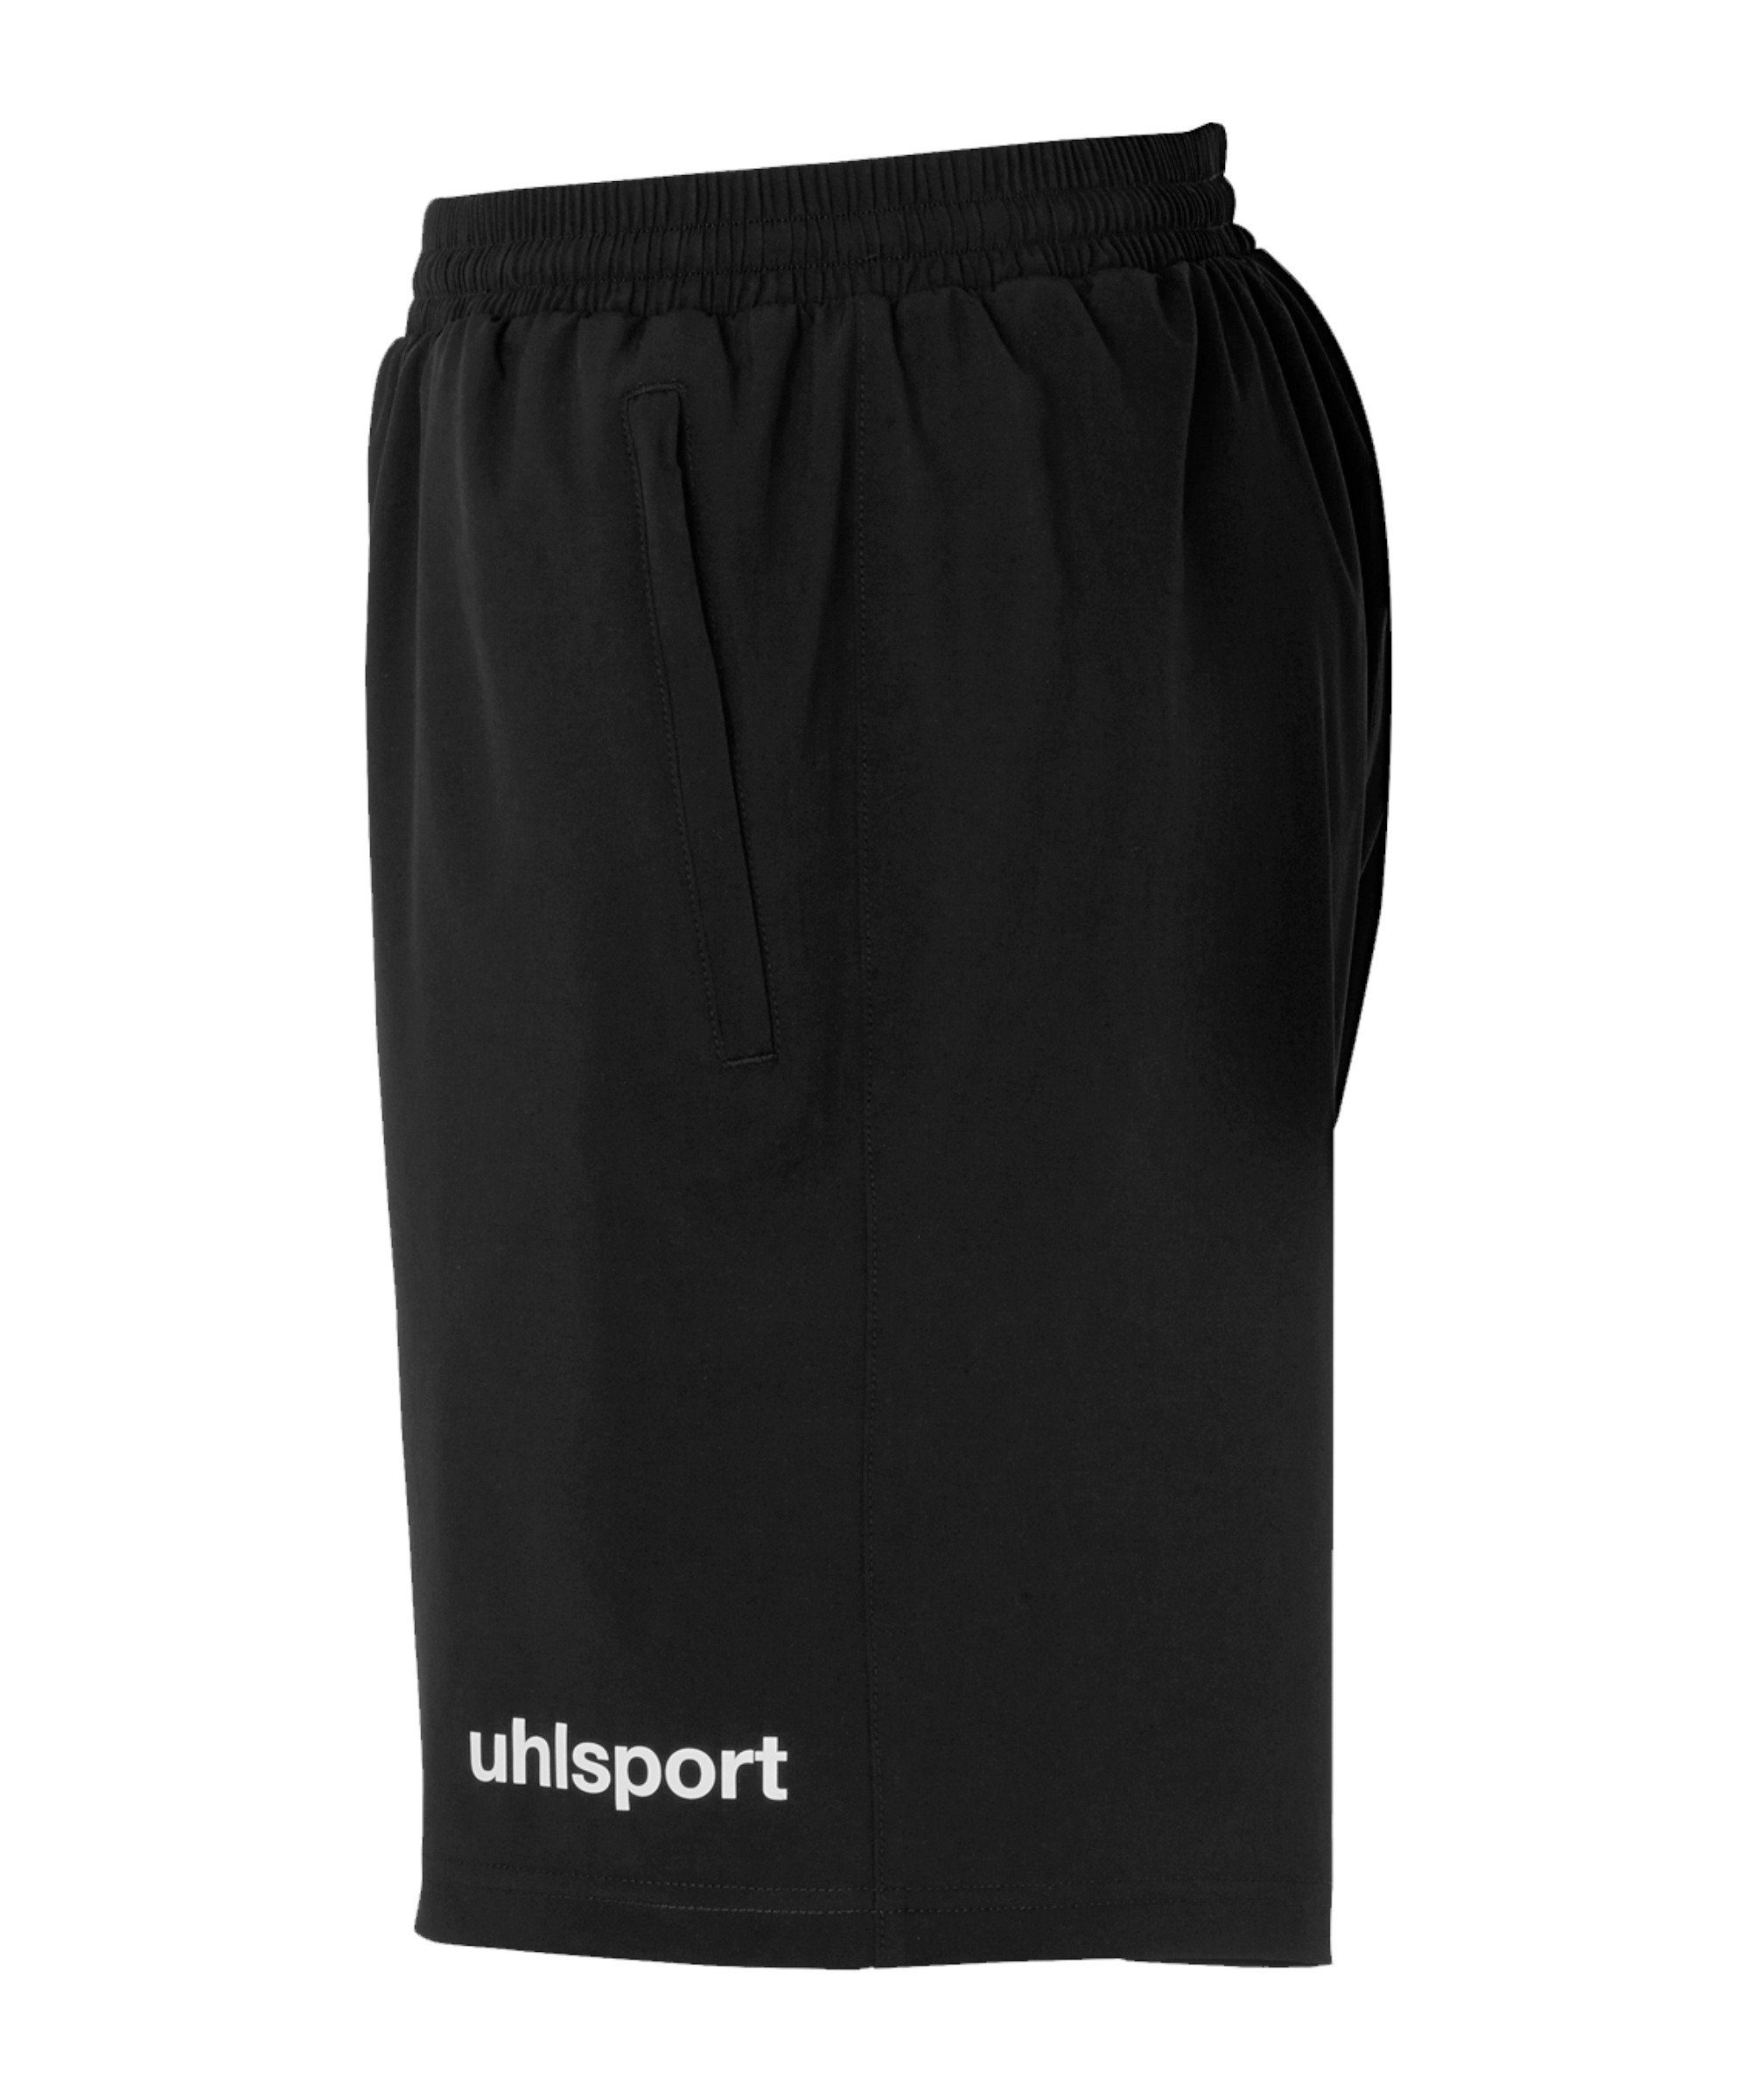 uhlsport Sporthose Essential Evo Woven Short